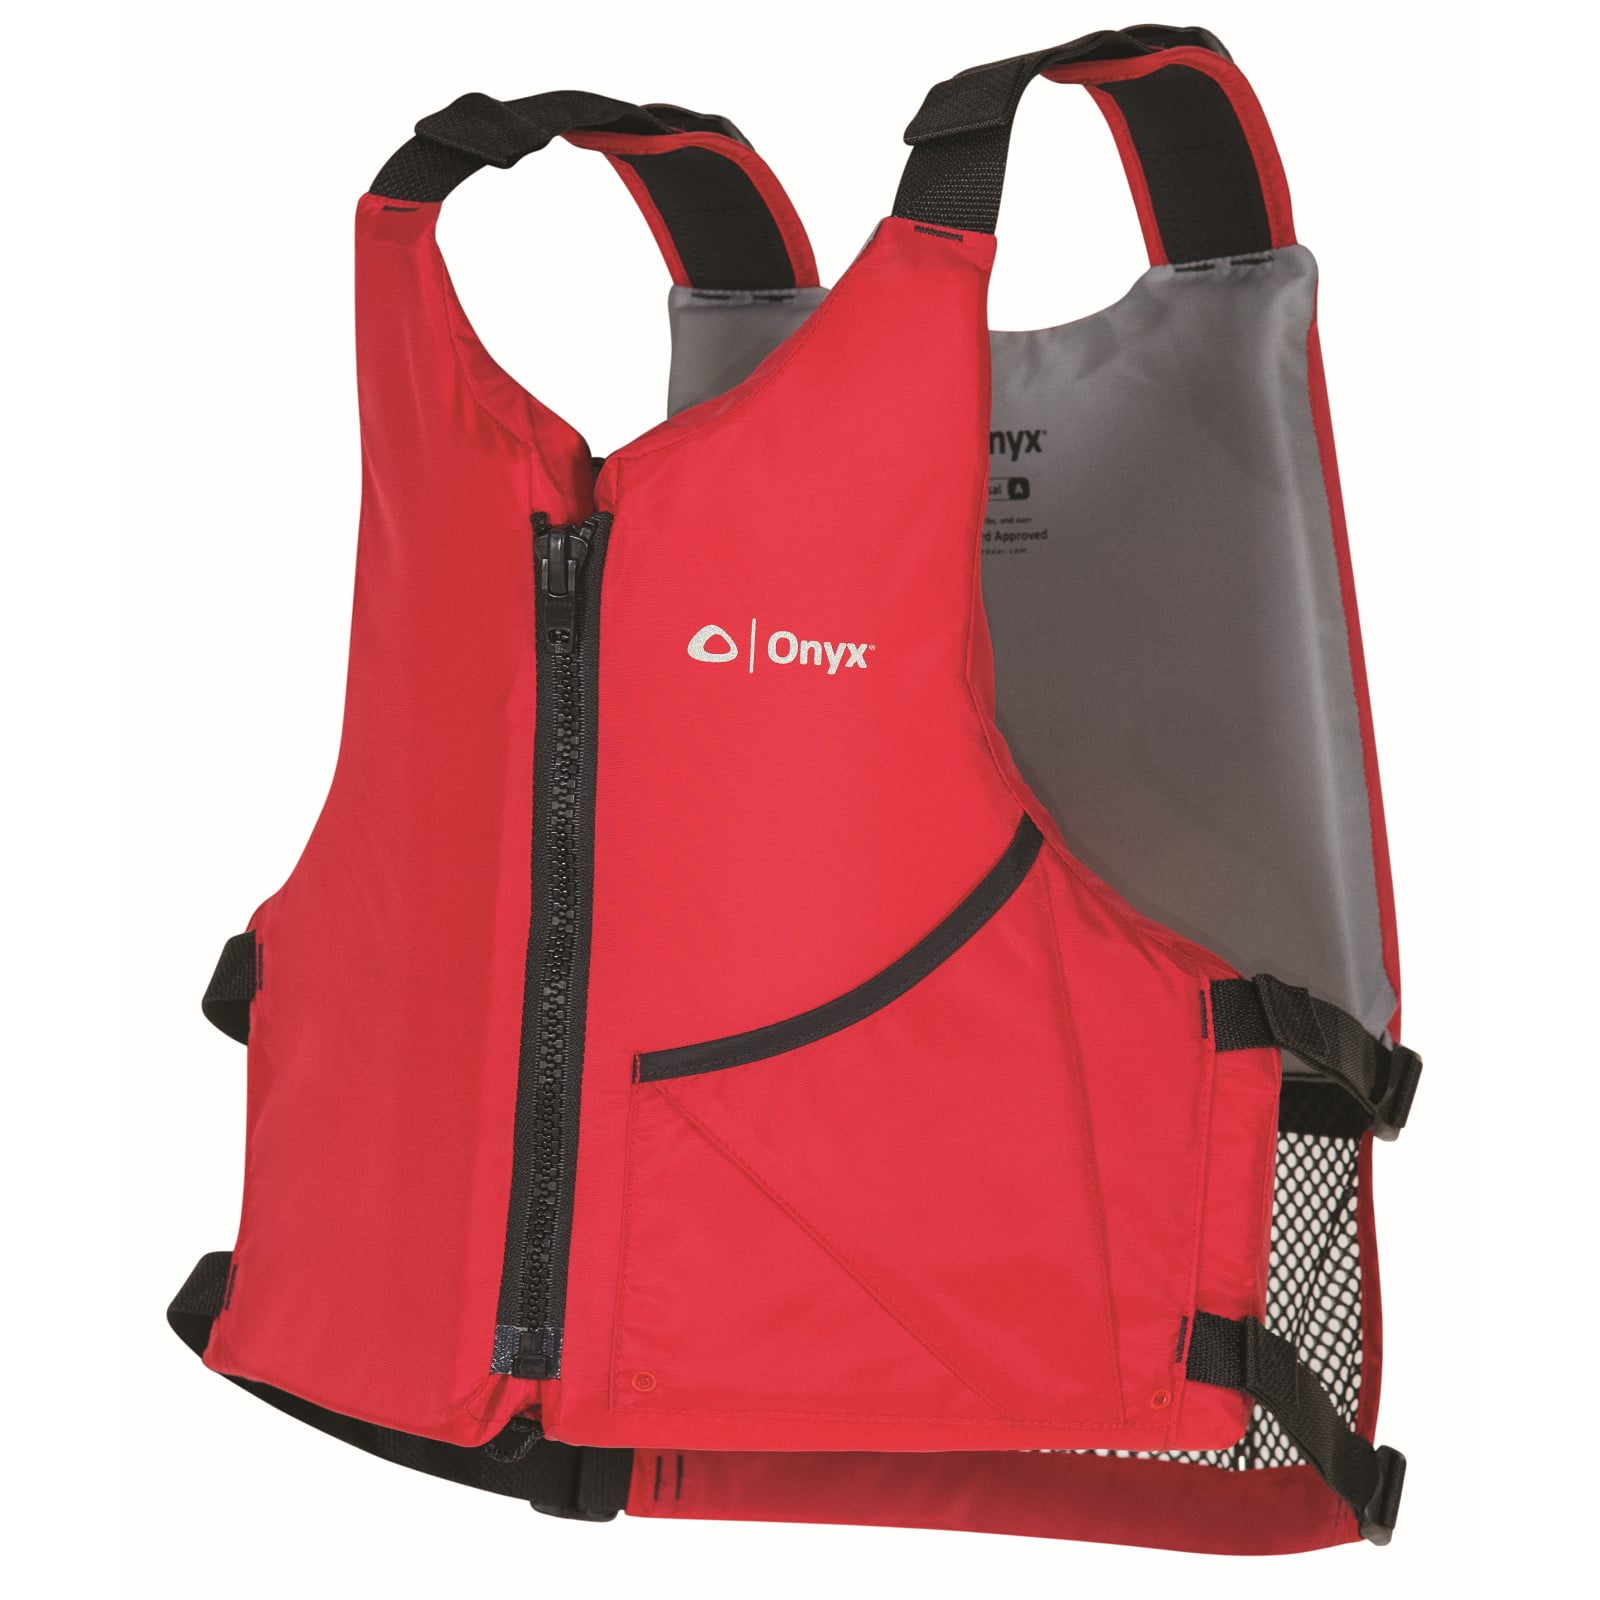 Onyx MoveVent Curve Paddle Sports Life Vest for sale online 